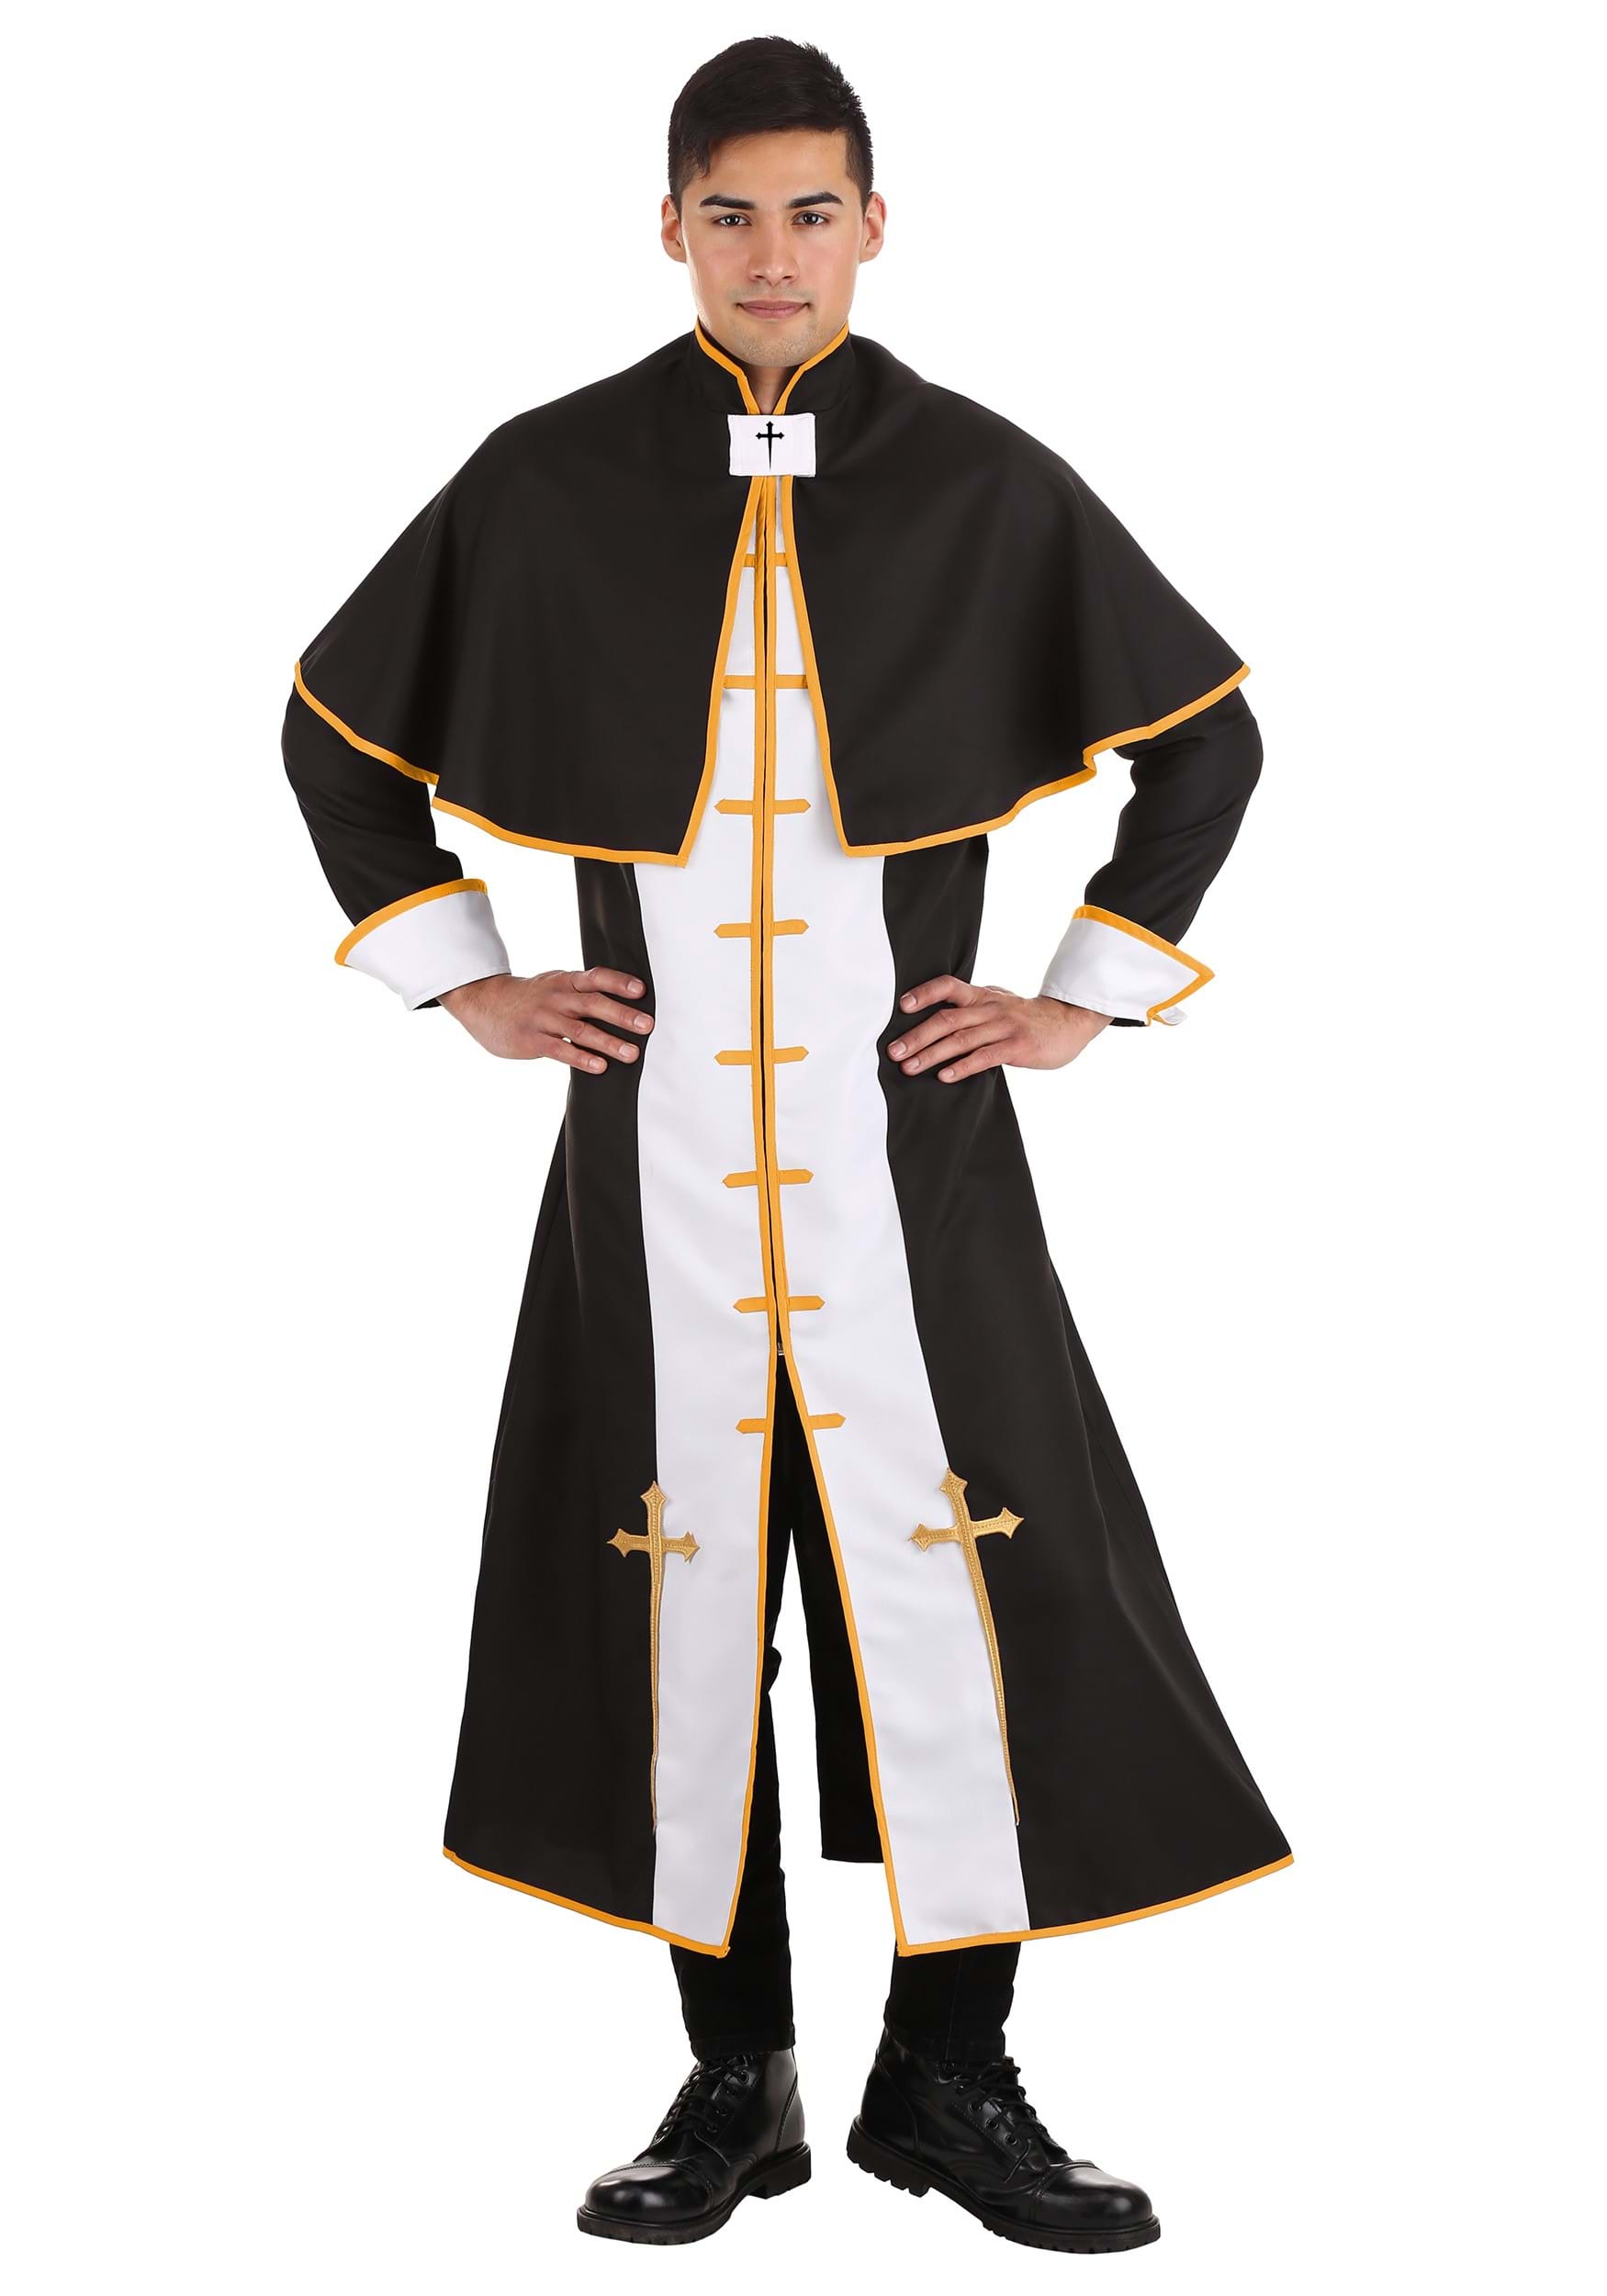 Photos - Fancy Dress FUN Costumes Men's Holy Priest Costume Black/Brown/White